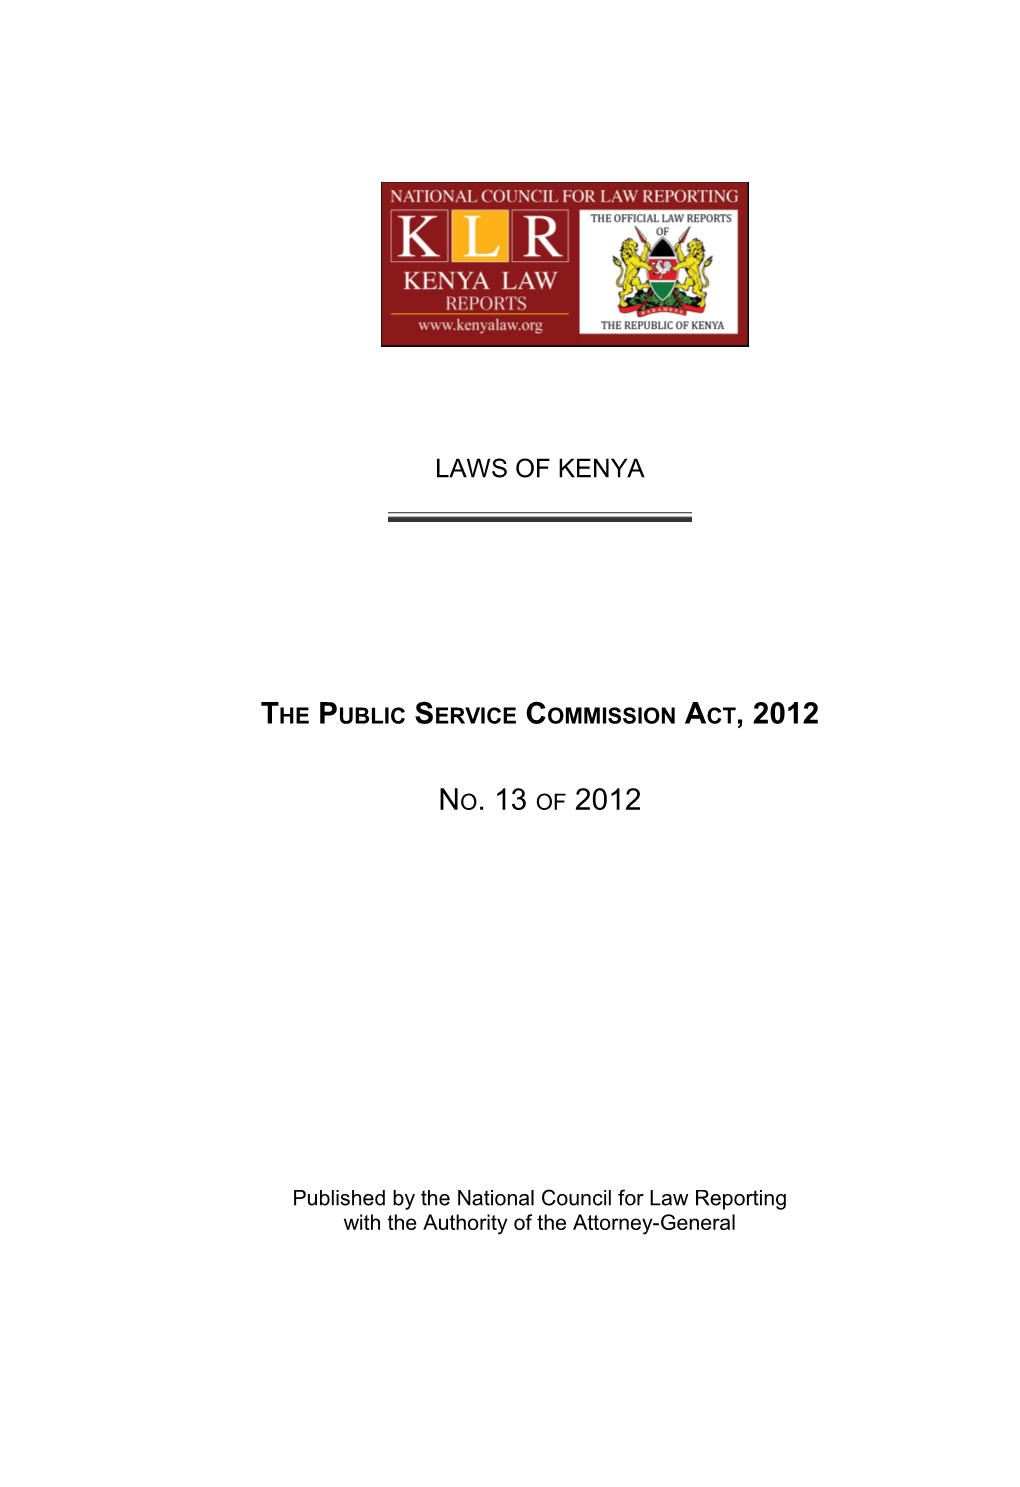 The Public Service Commission Act, 2012